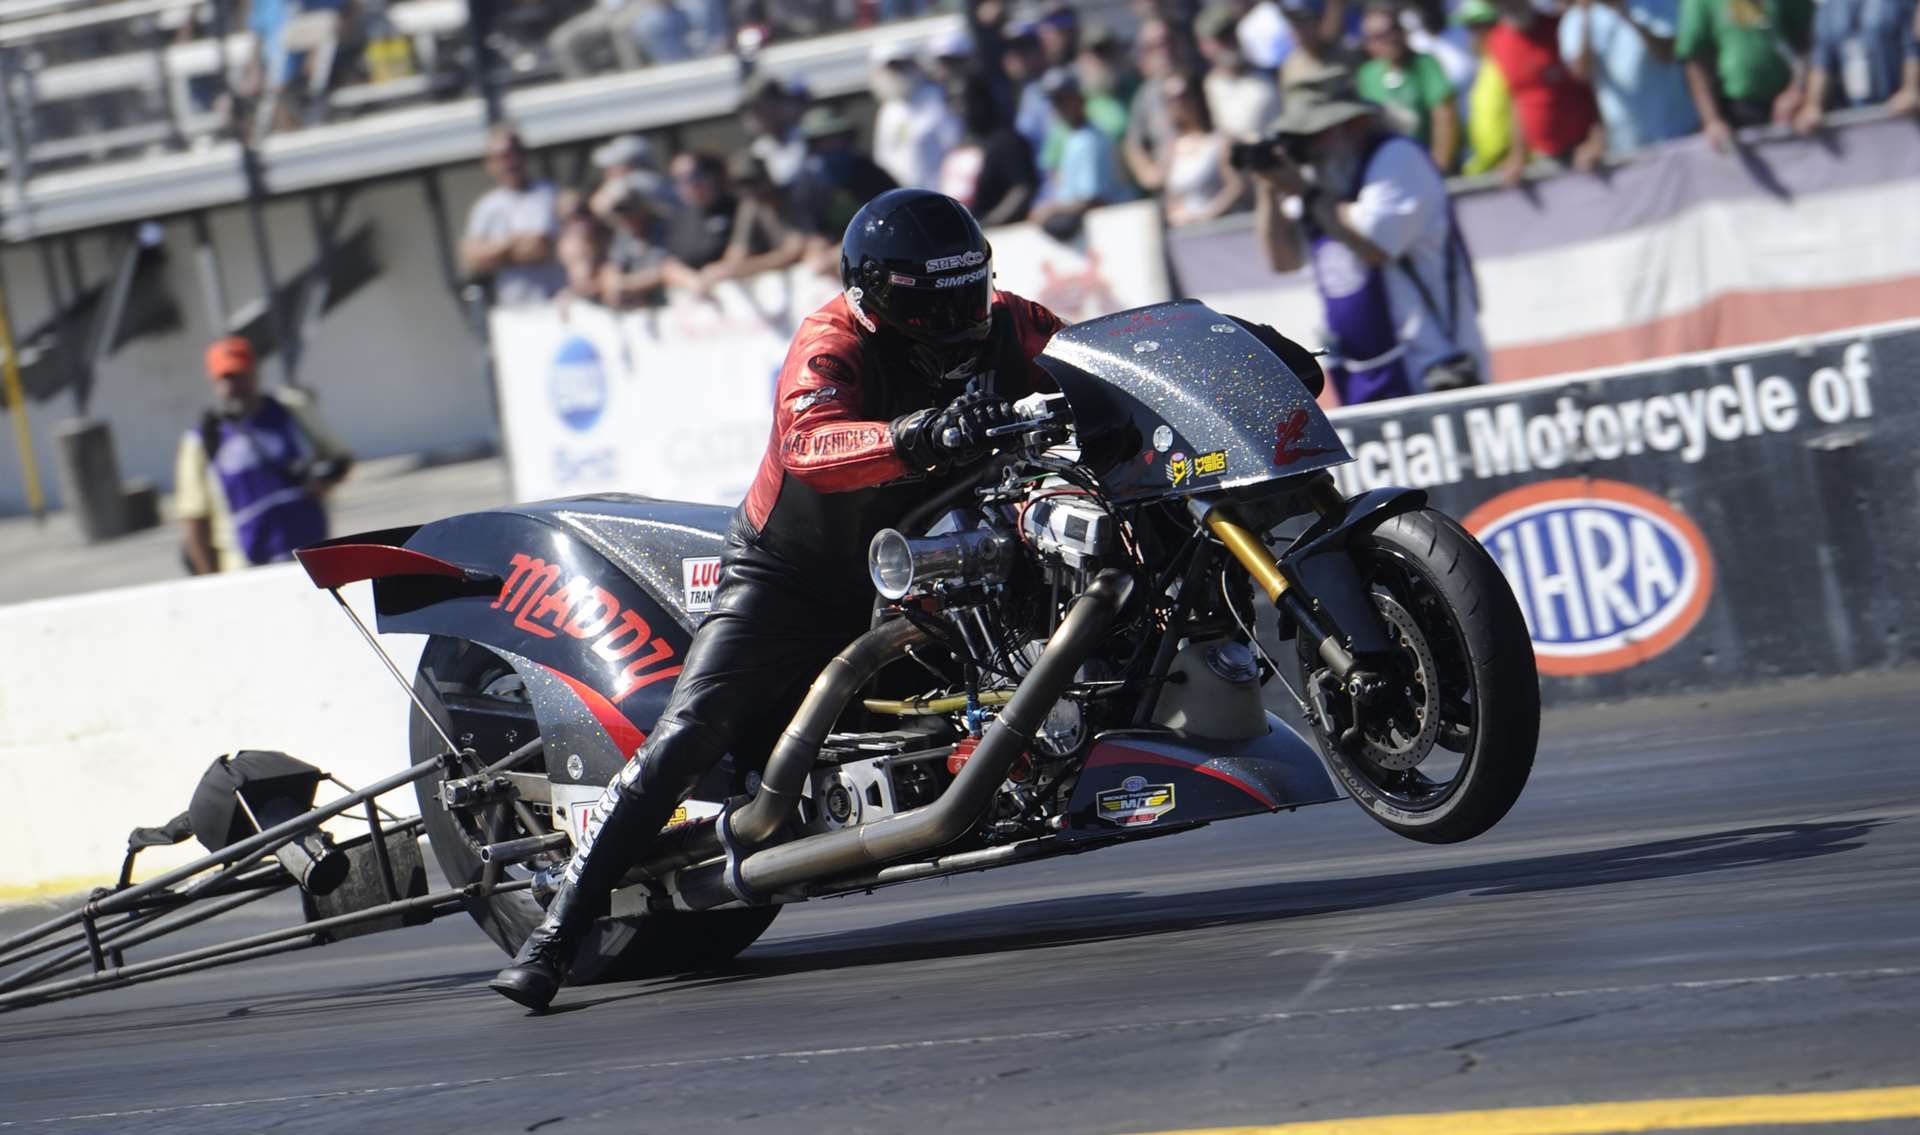 Tii Tharpe's Top Fuel Harley popping a wheelie